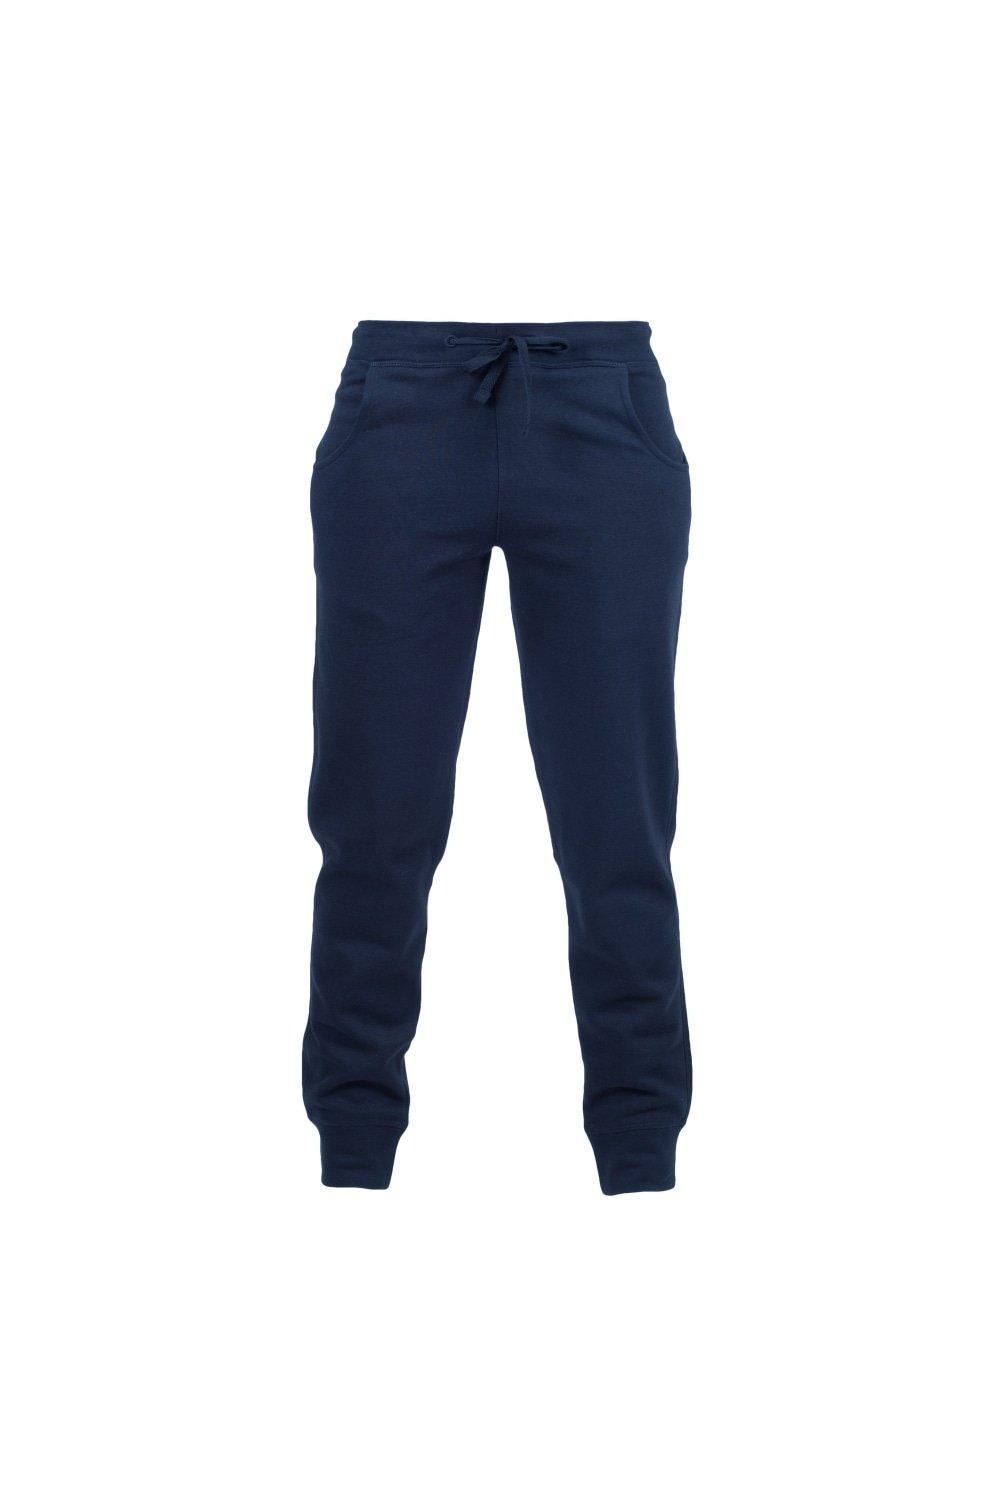 Узкие спортивные брюки Skinni Minni с манжетами (2 шт. в упаковке) Skinni Fit, темно-синий